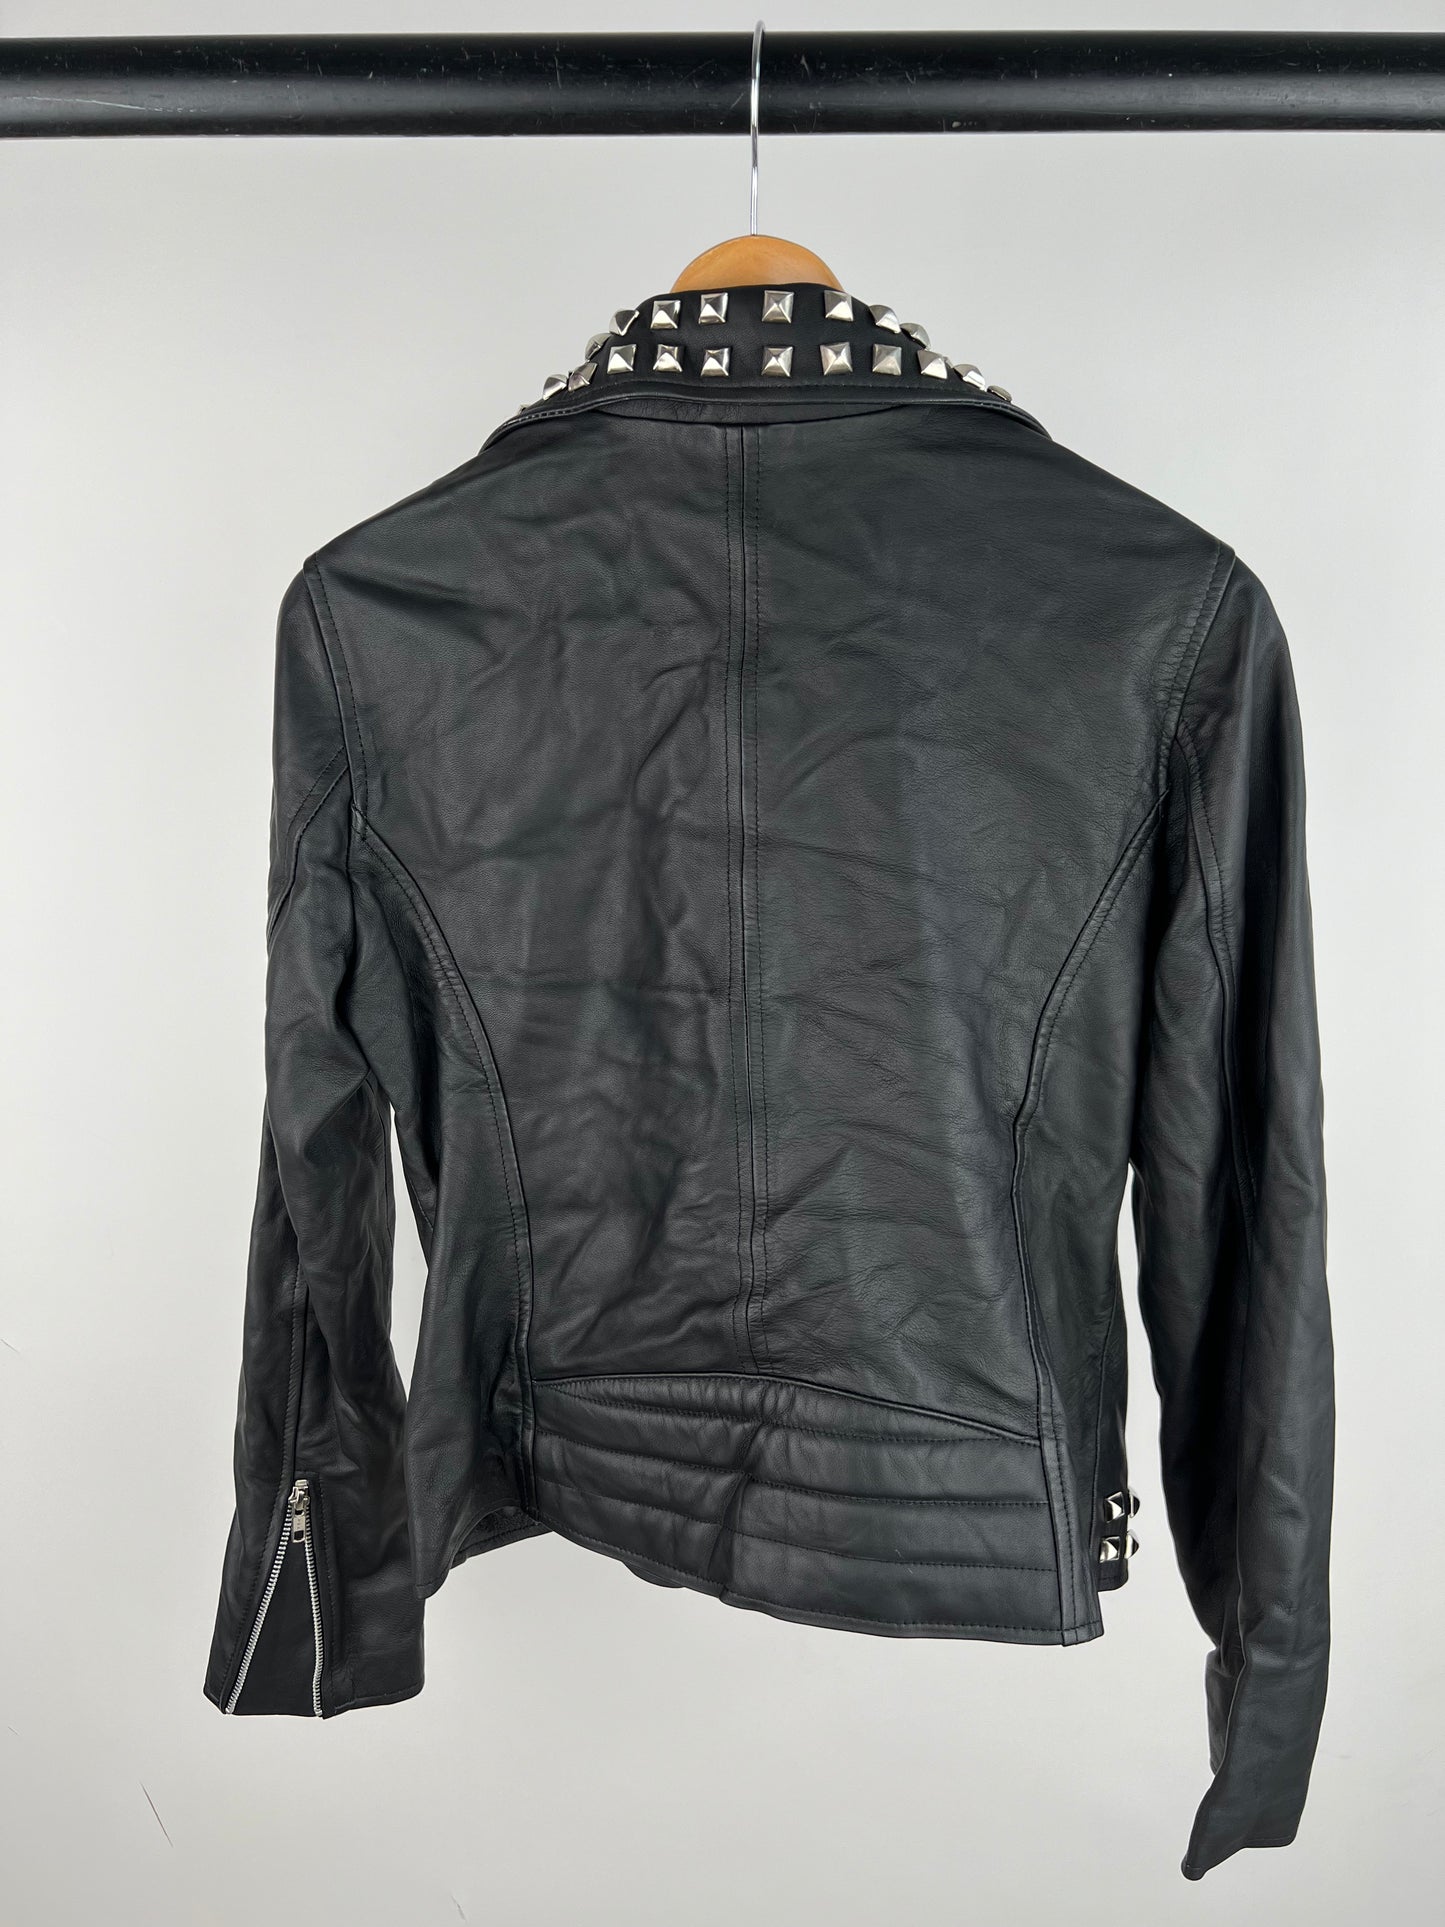 Vintage 90s Studded Classic Leather Biker Jacket